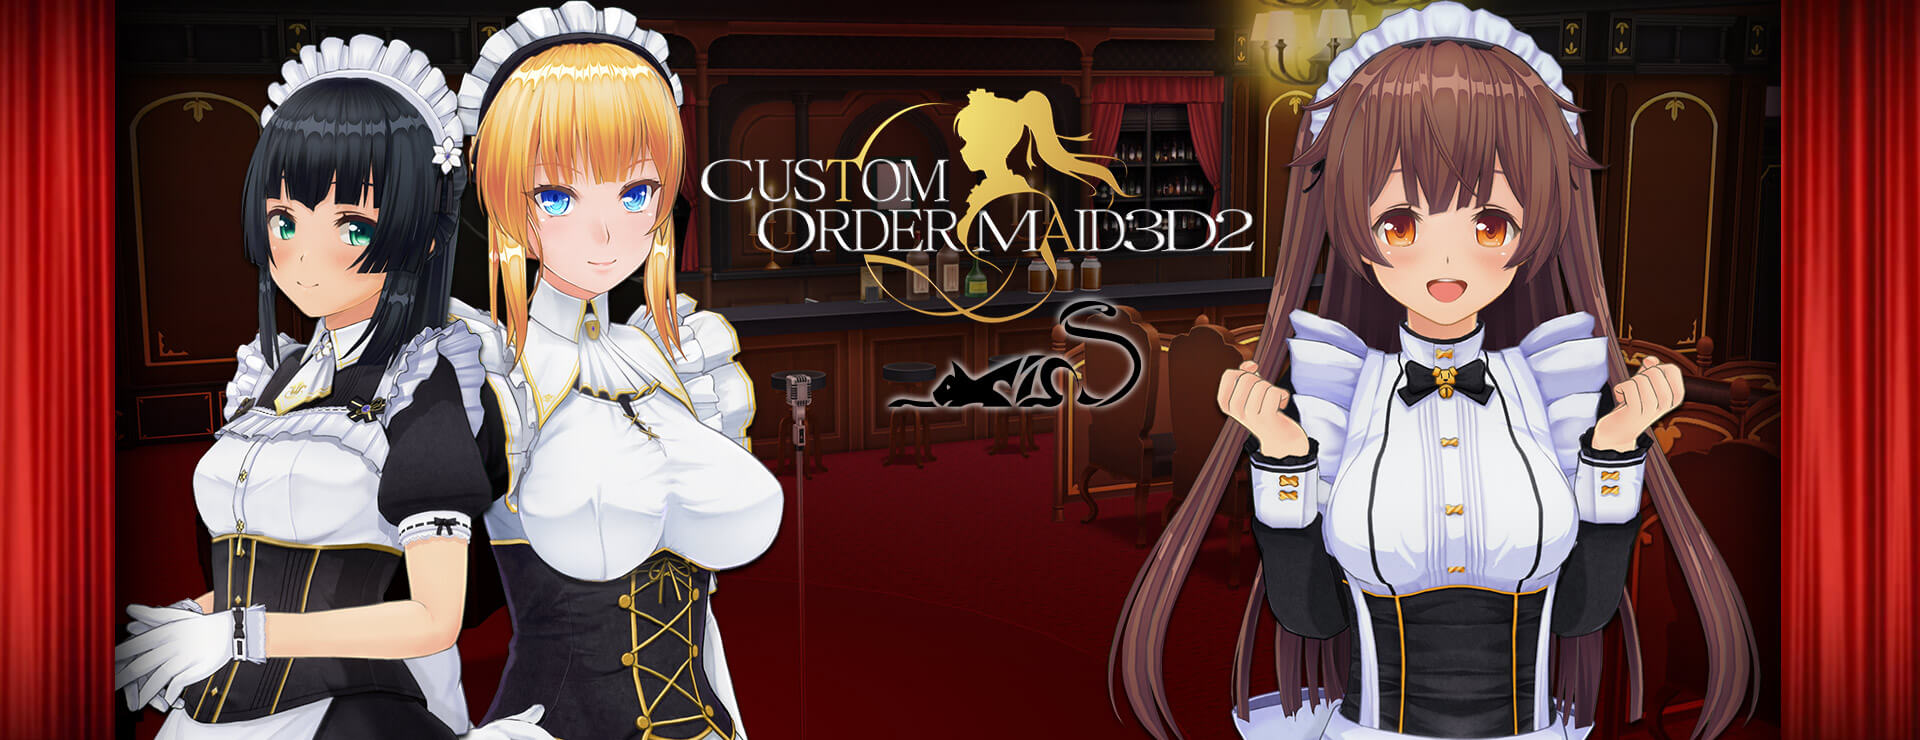 Custom Order Maid 3D2 Game - Simulation ゲーム